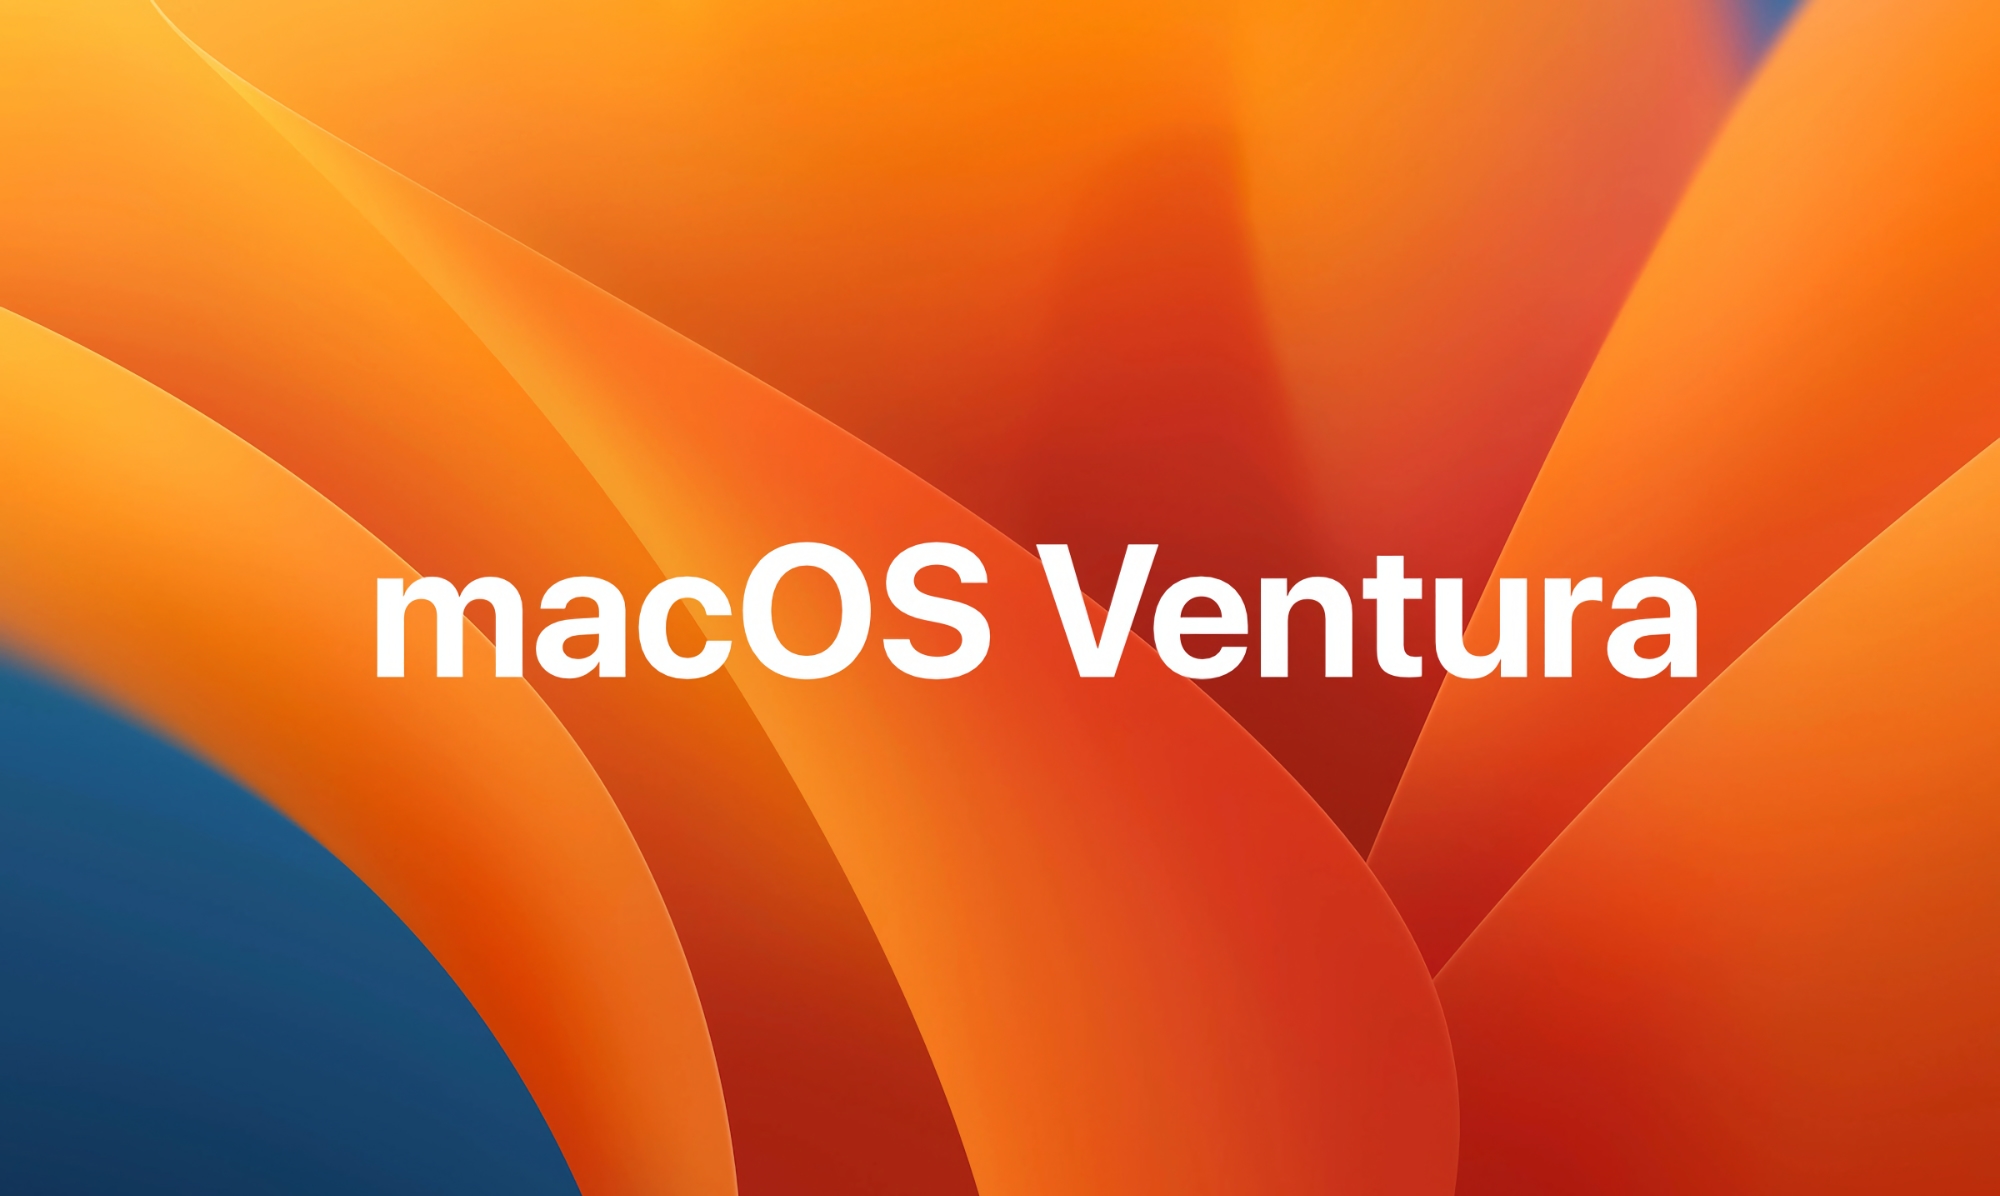 Po iOS 16.6 Beta: Apple udostępnia deweloperom pierwszą wersję beta macOS Ventura 13.5